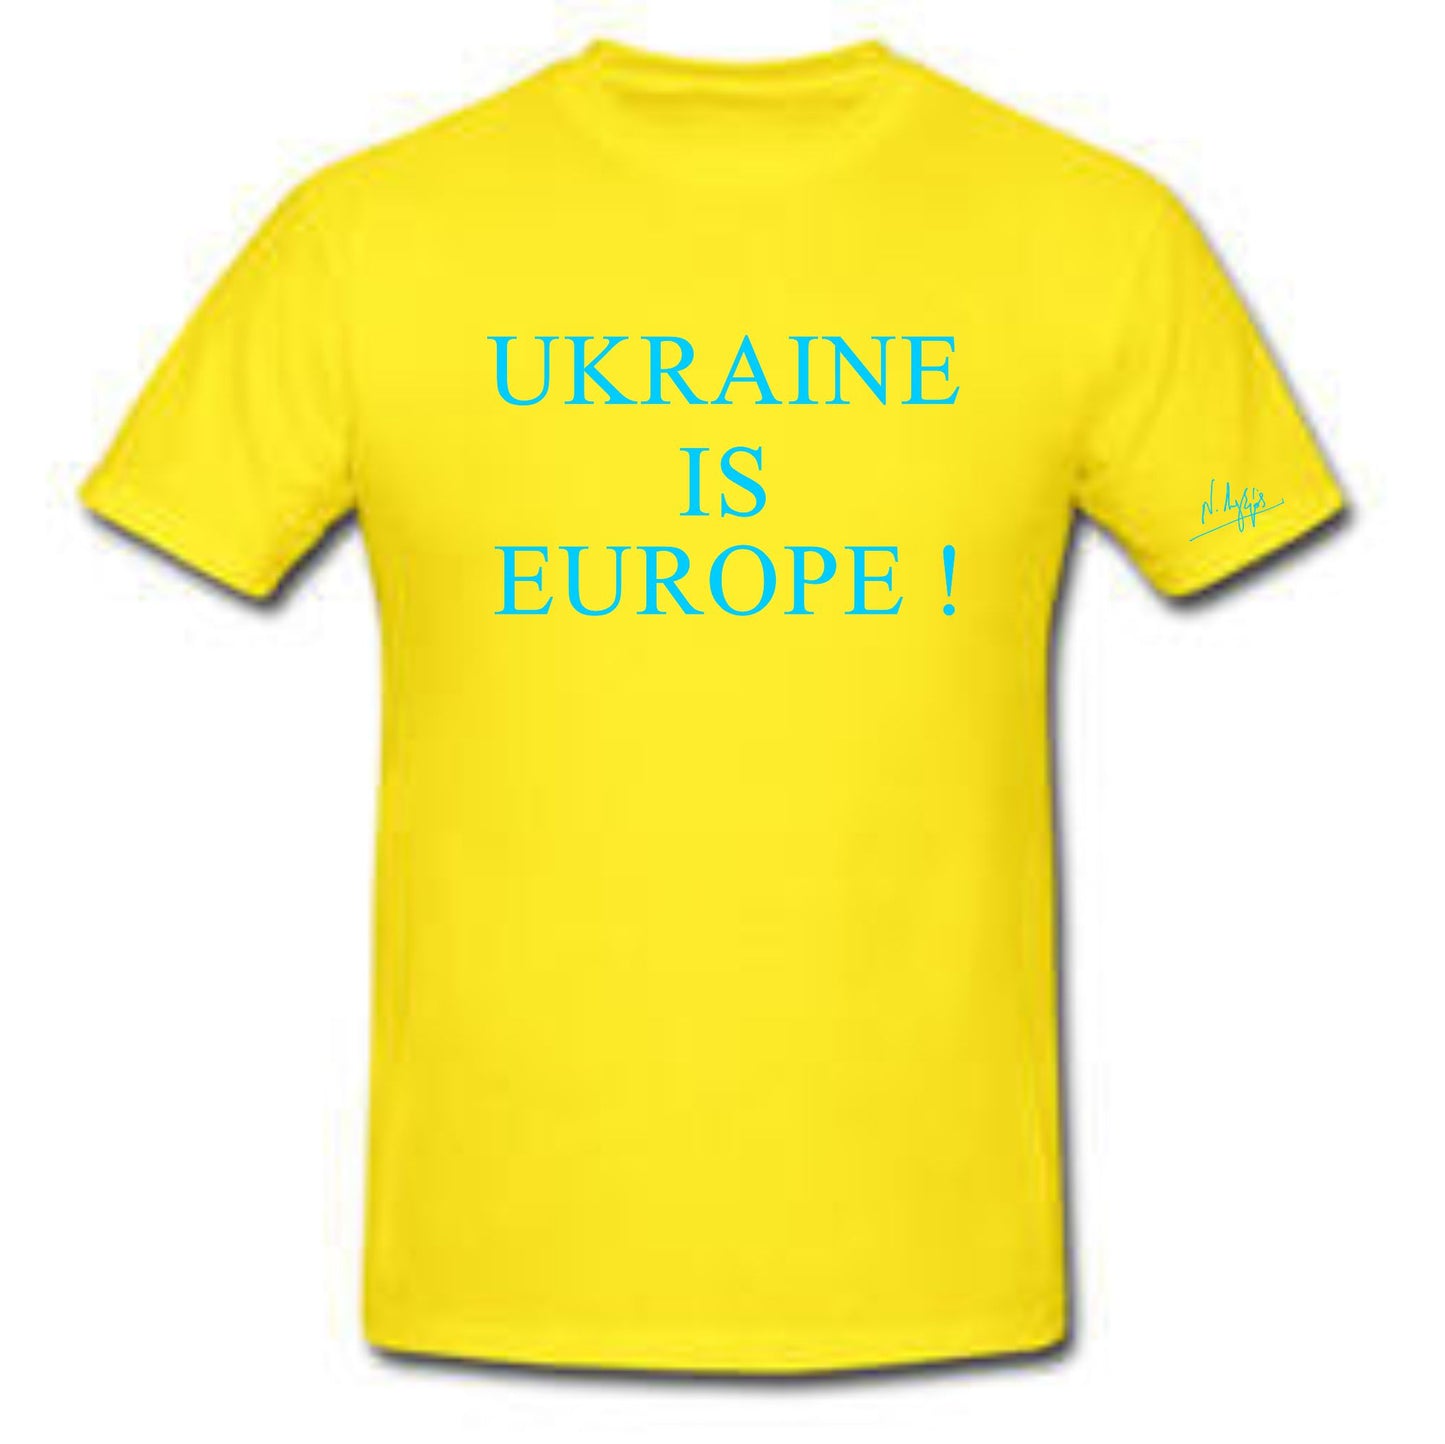 Ukraine is Europe !